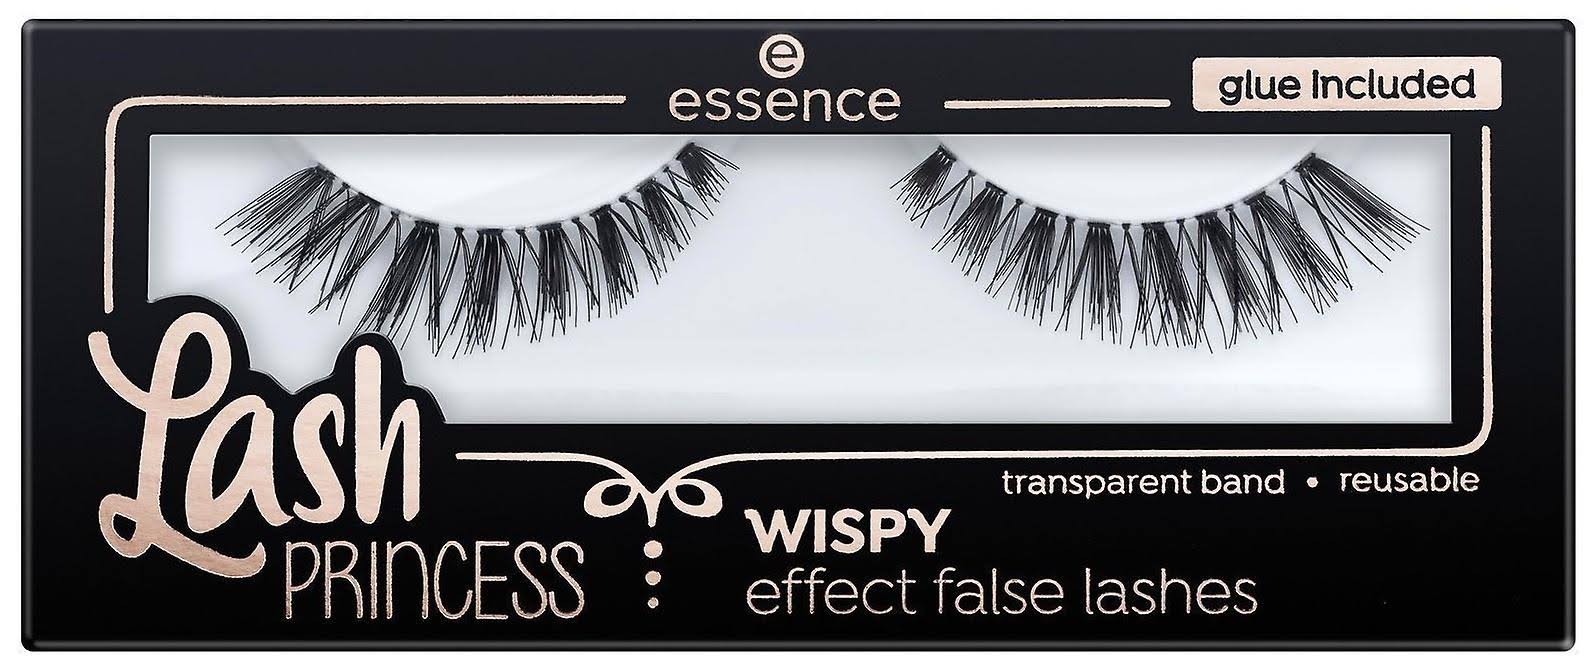 Essence Lash Princess Wispy Effect False Lashes